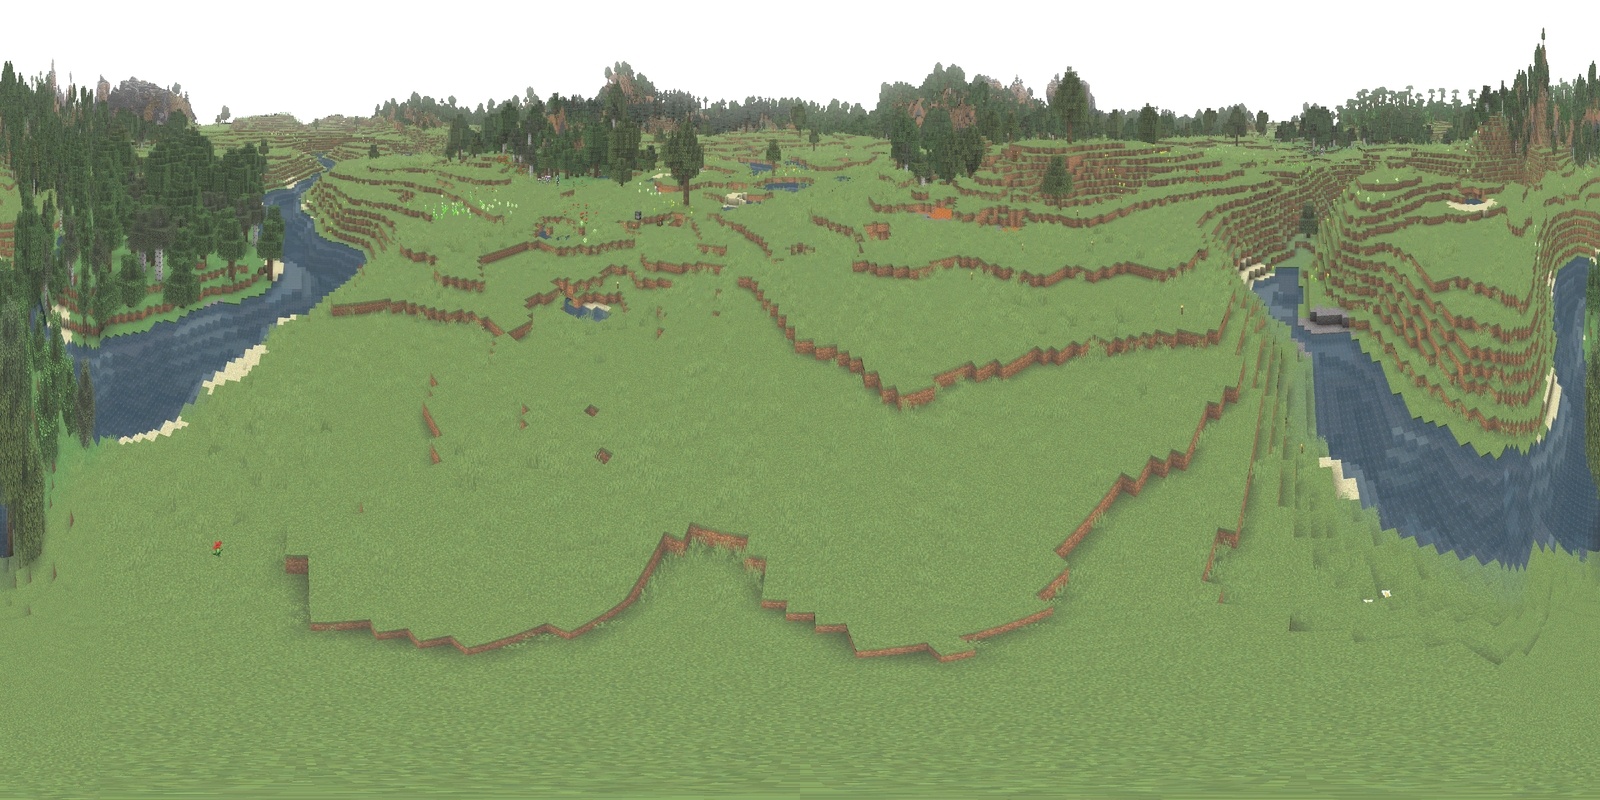 The Super Smash Bros Minecraft Plains map